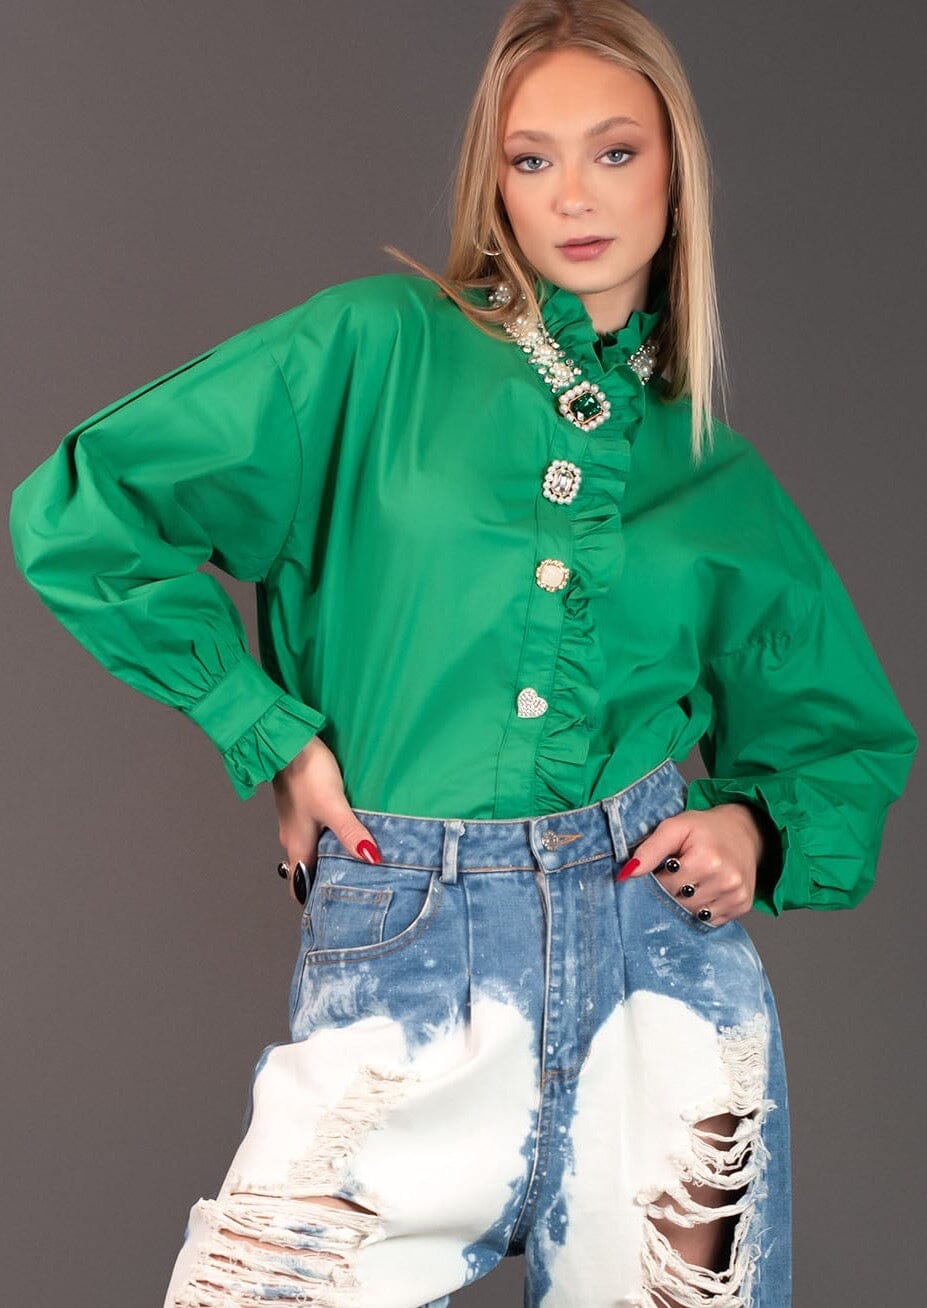 Avant Garde Embellished Dress Shirt Blouses Kate Hewko 